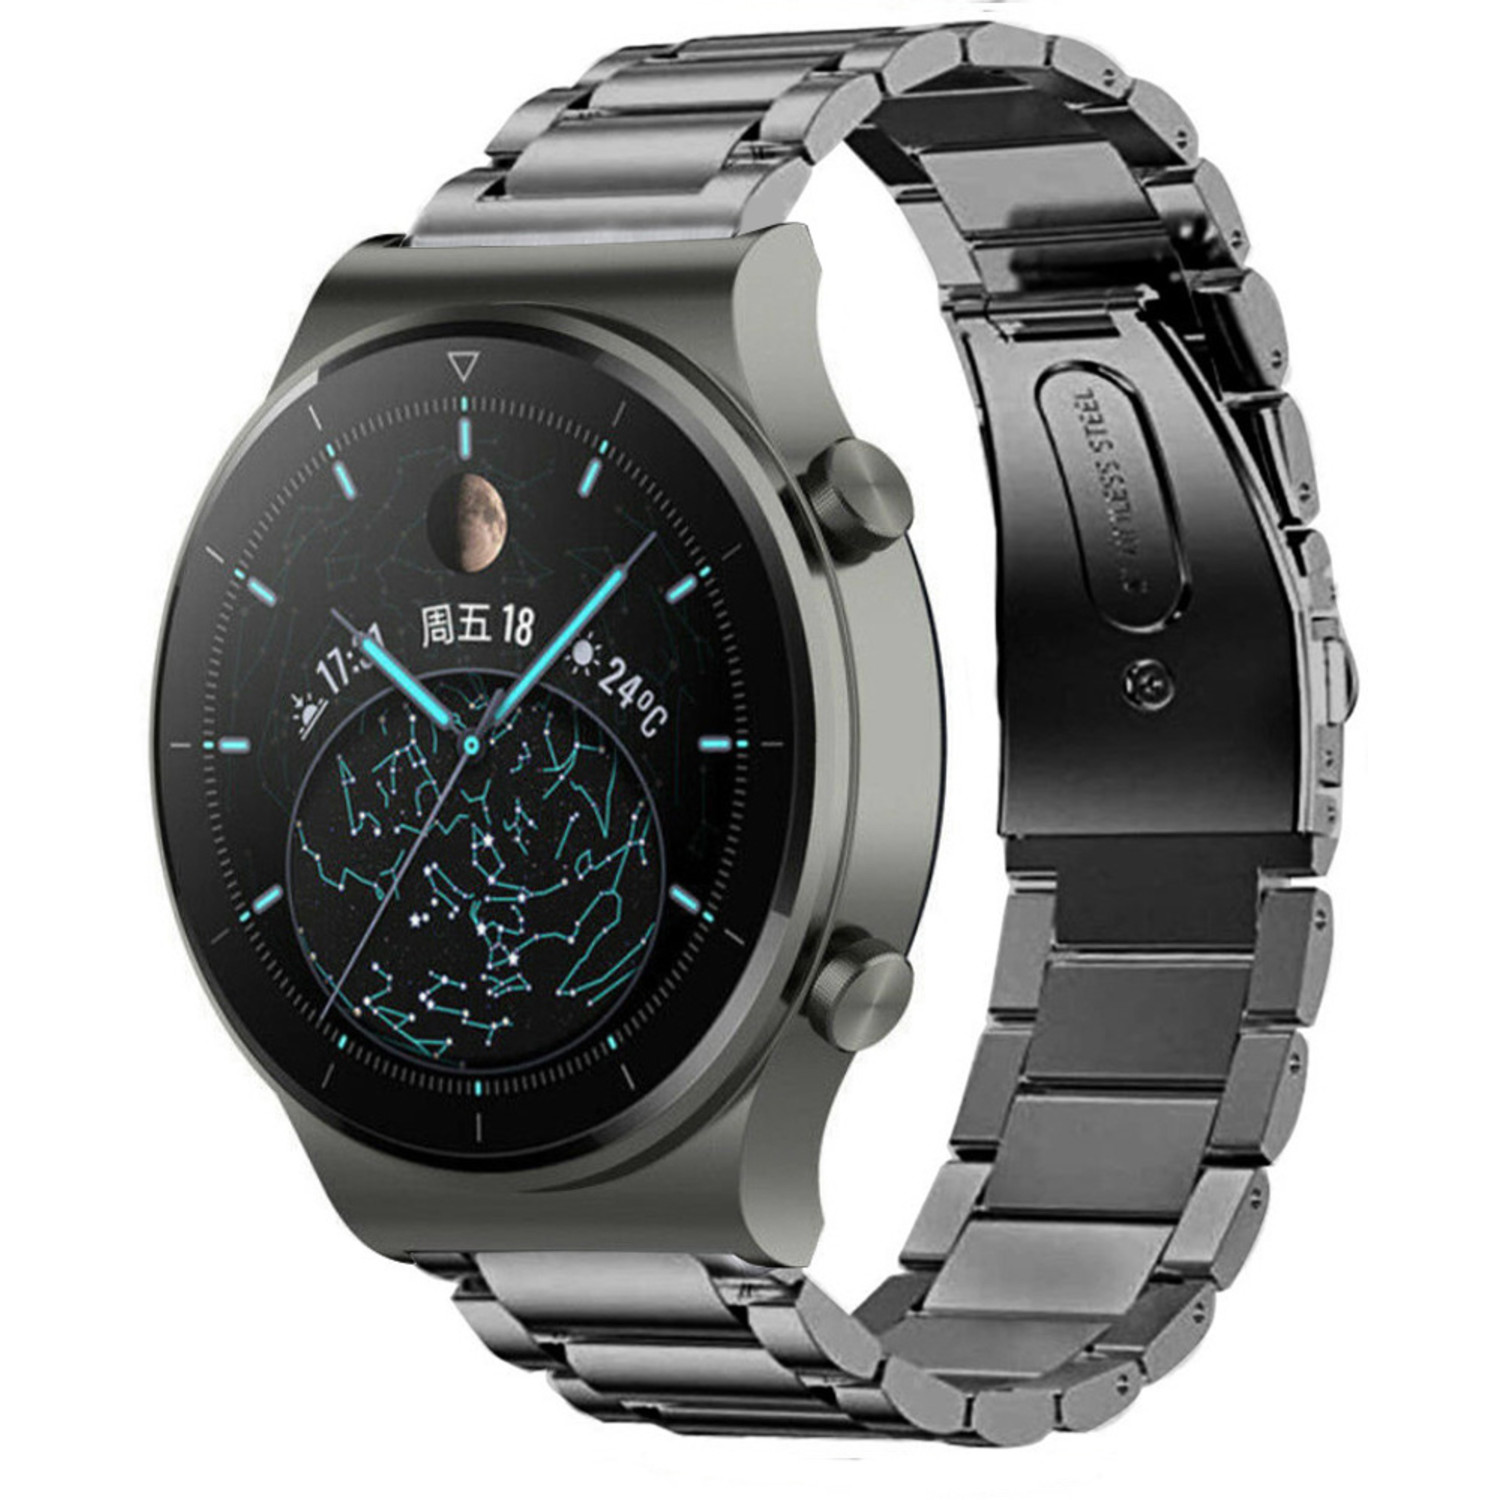 Gorpin-correa De Reloj Gt2 Pro Para Huawei Watch Gt2 Pro, Brazalete Ancho  De 22mm, Color Gris Plateado - Correas De Reloj - AliExpress